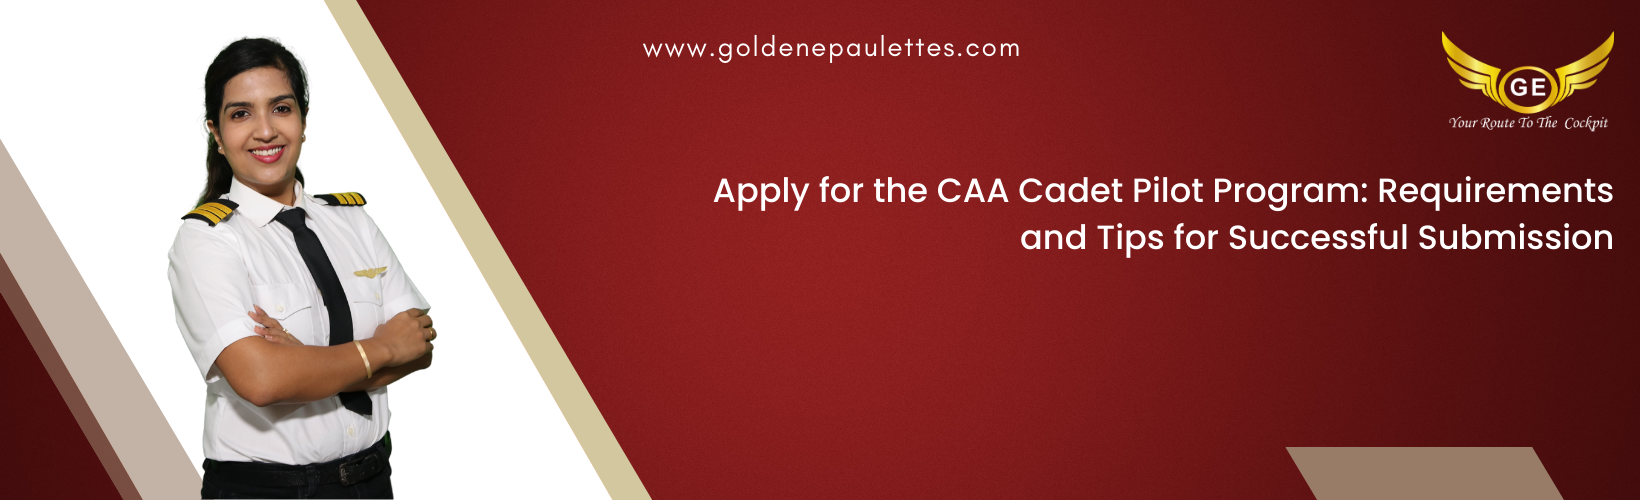 Applying to the CAA Cadet Pilot Program